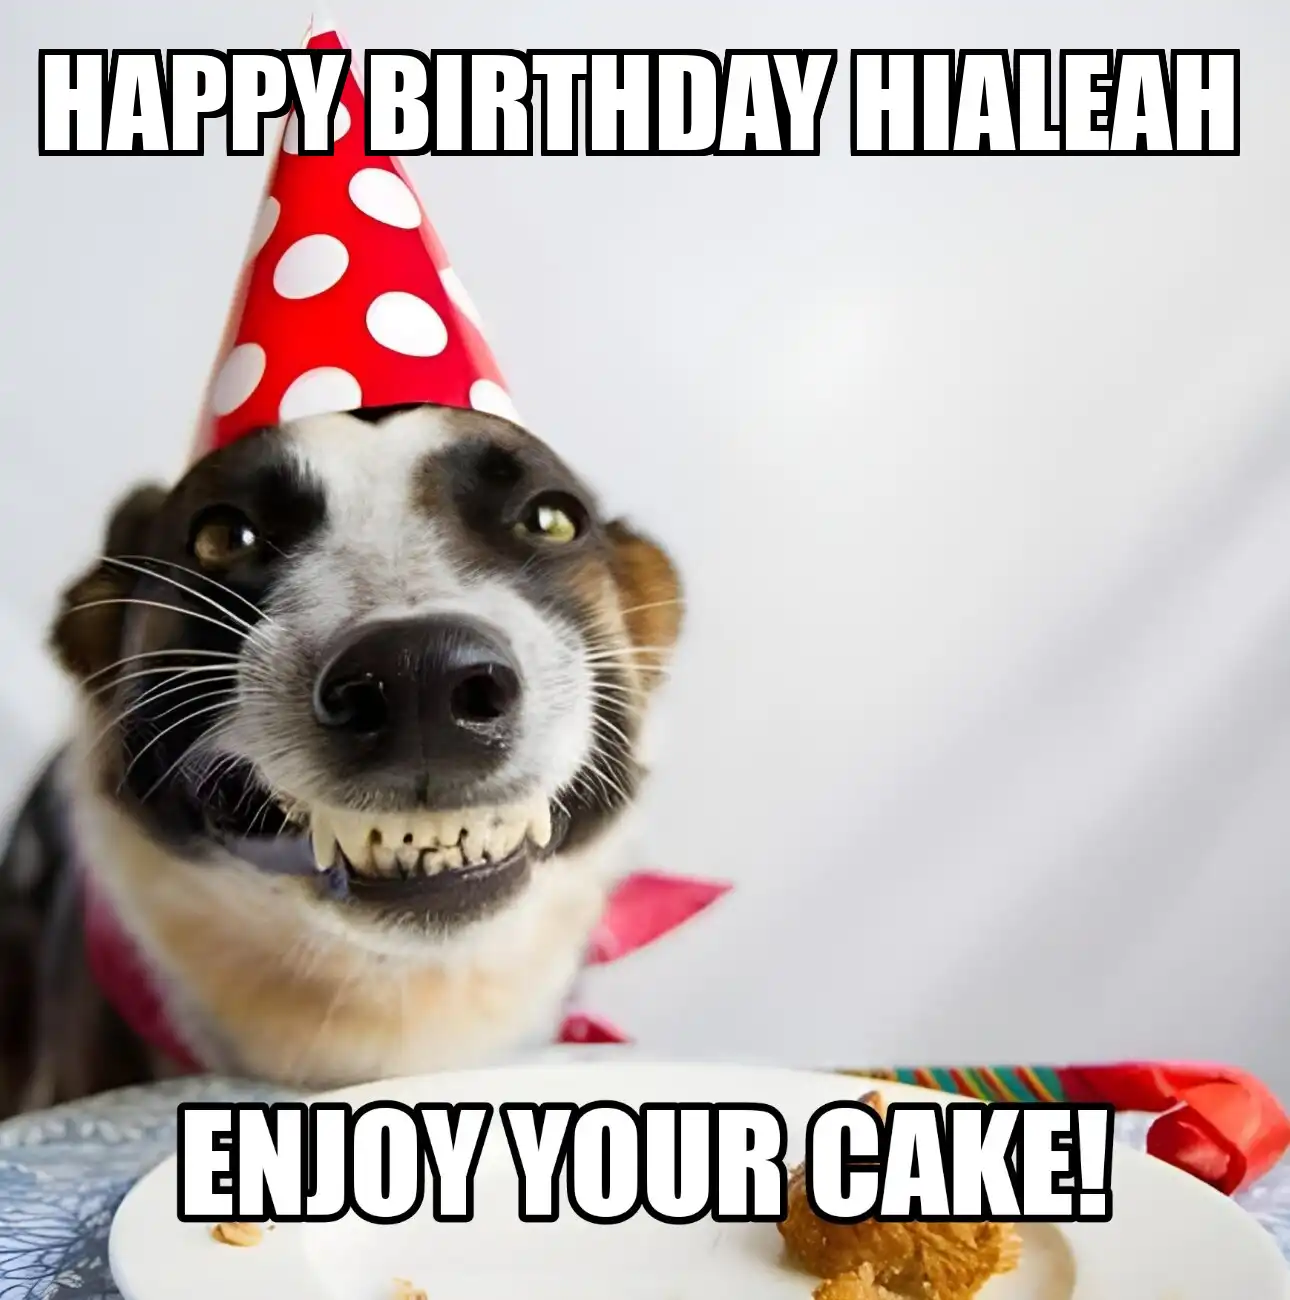 Happy Birthday Hialeah Enjoy Your Cake Dog Meme